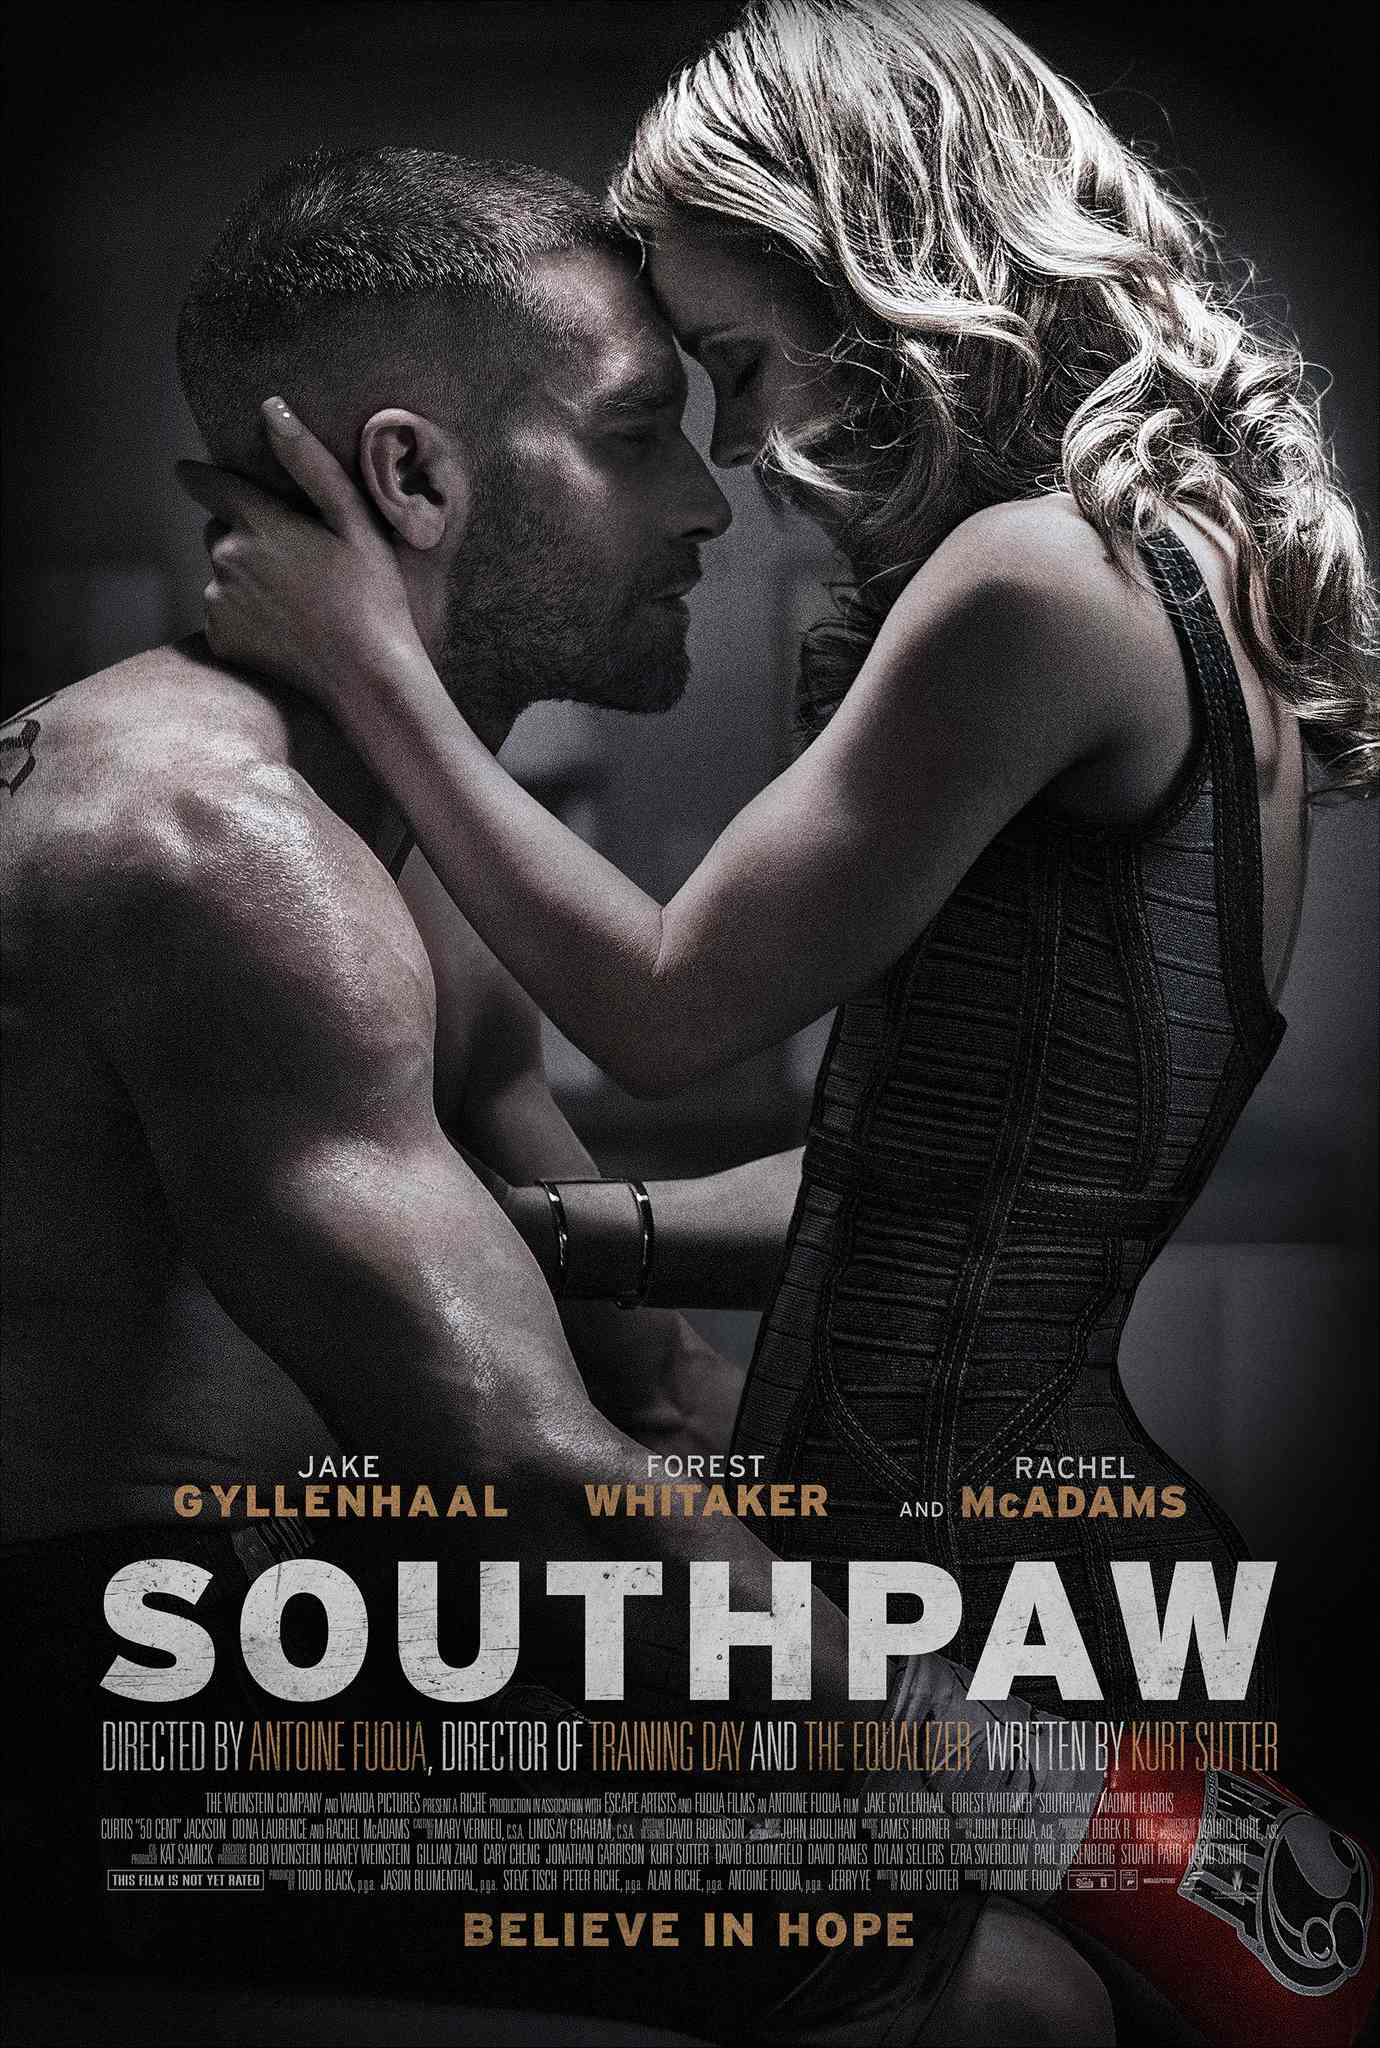 FULL MOVIE: Southpaw (2015)